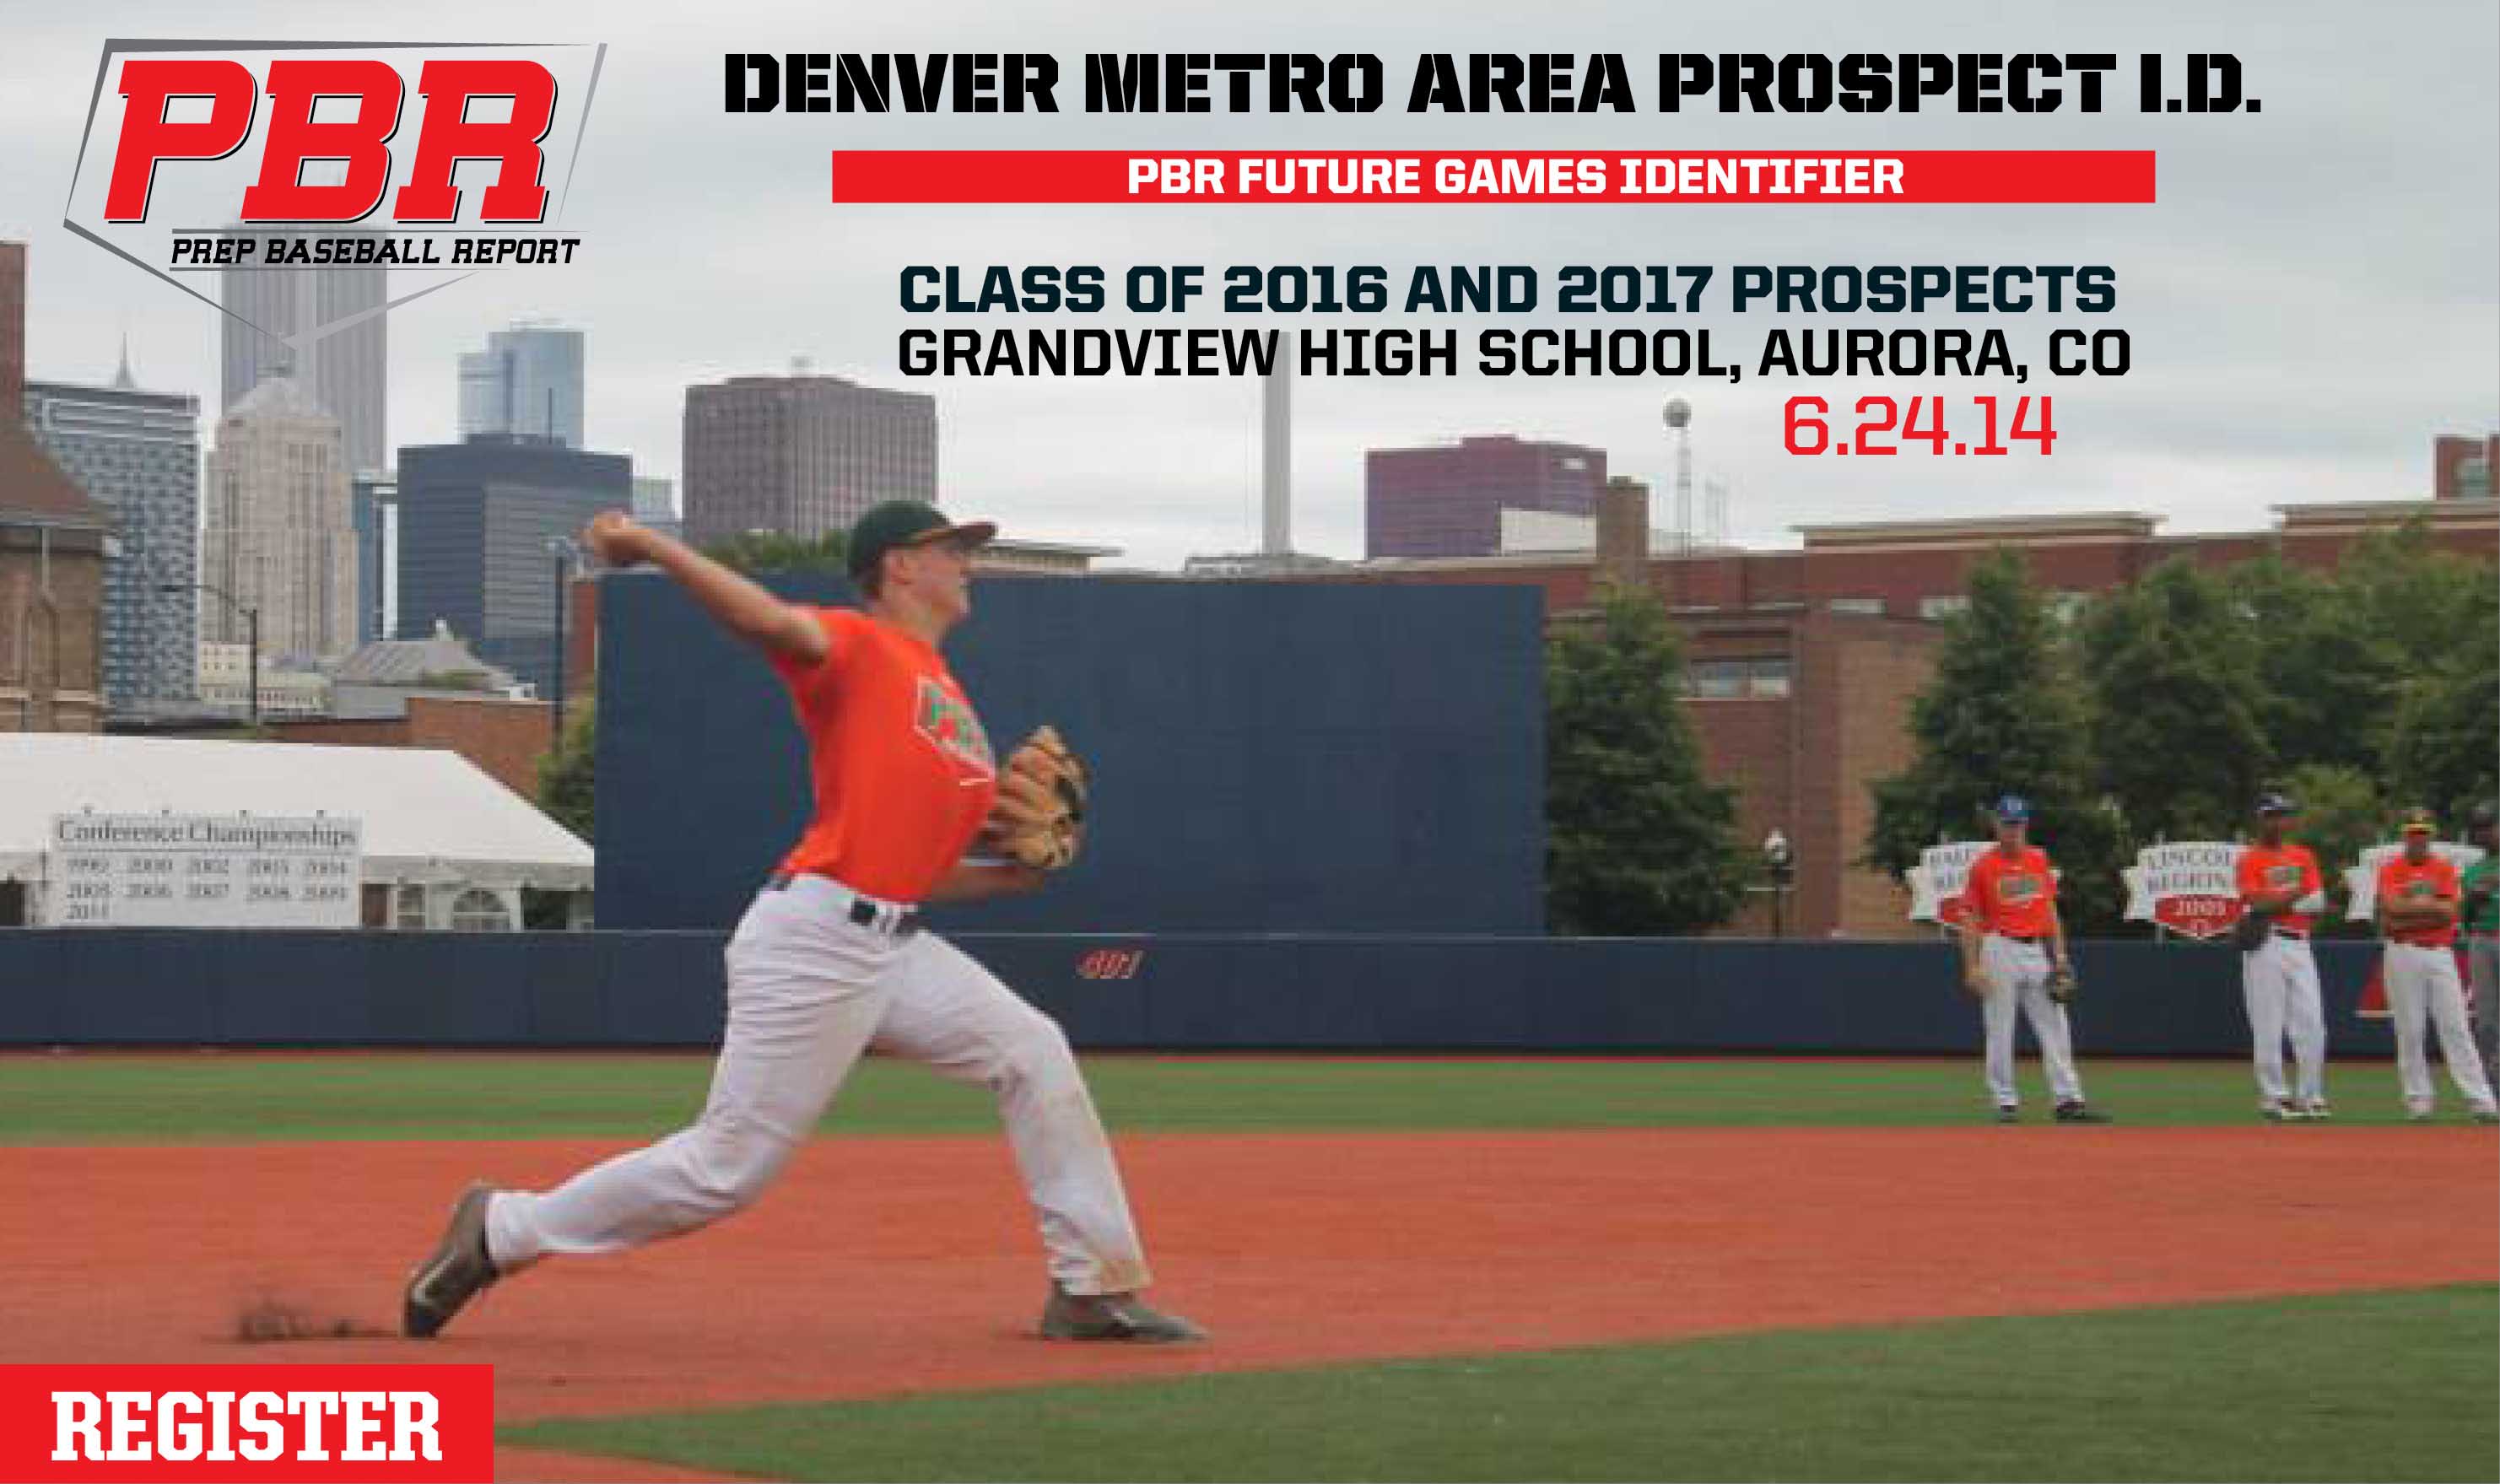 Denver Metro Prospect ID camp